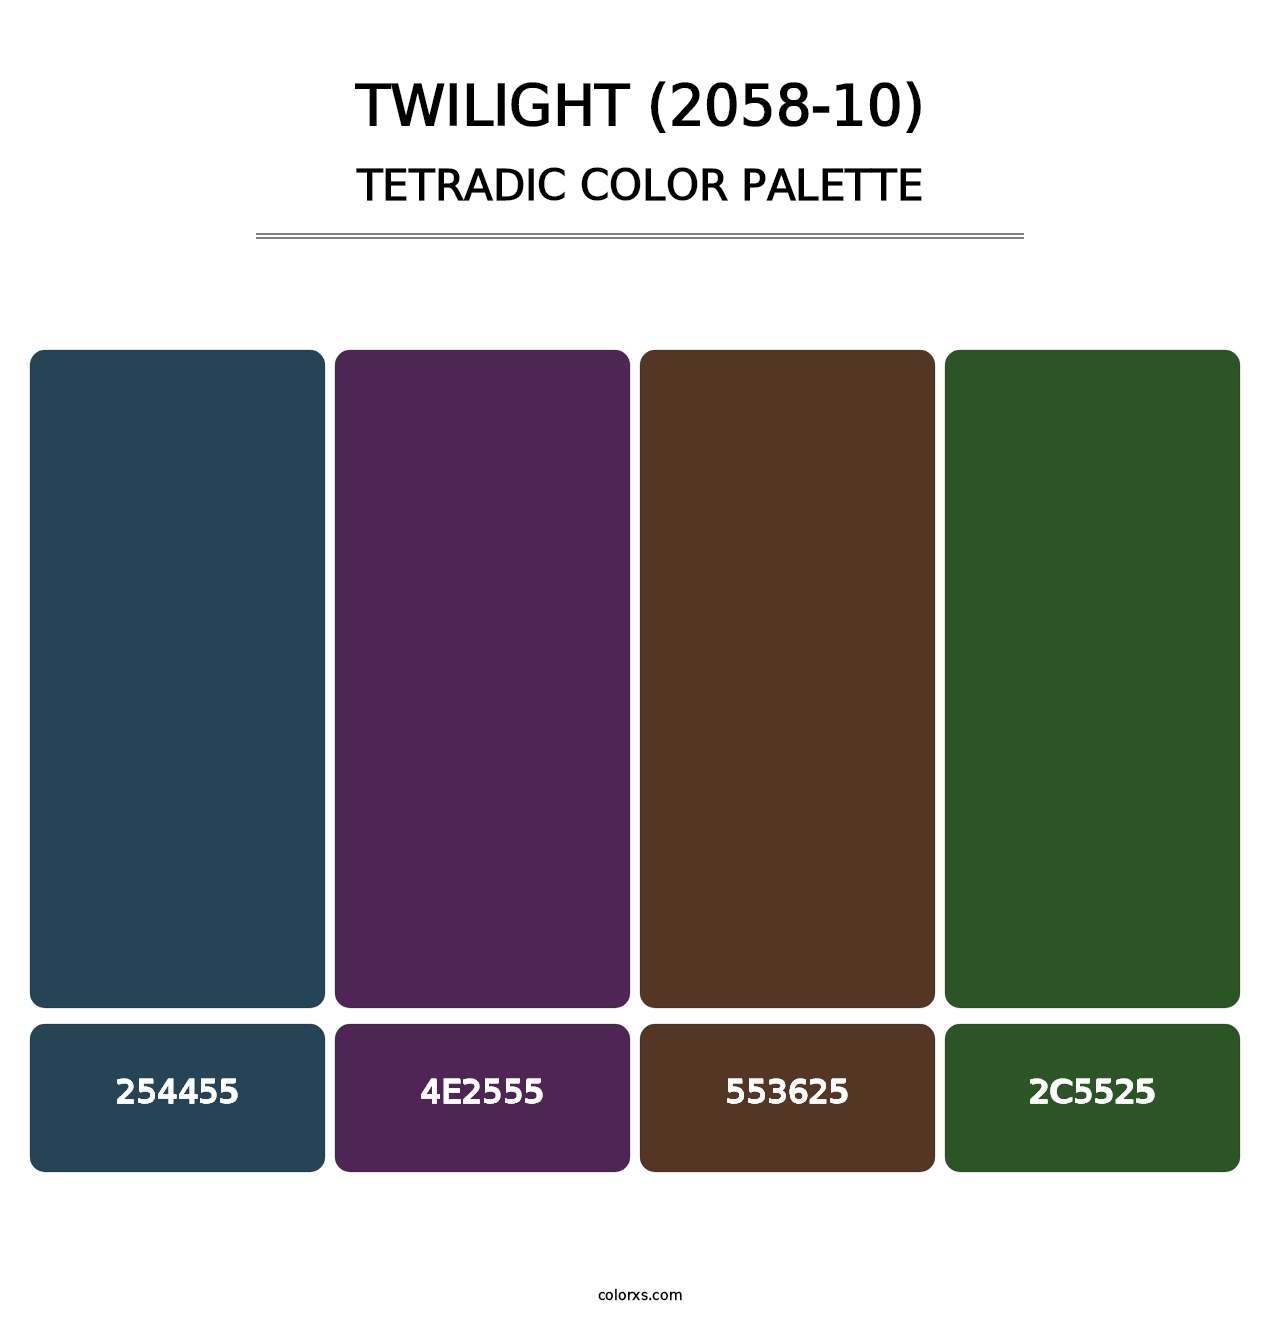 Twilight (2058-10) - Tetradic Color Palette